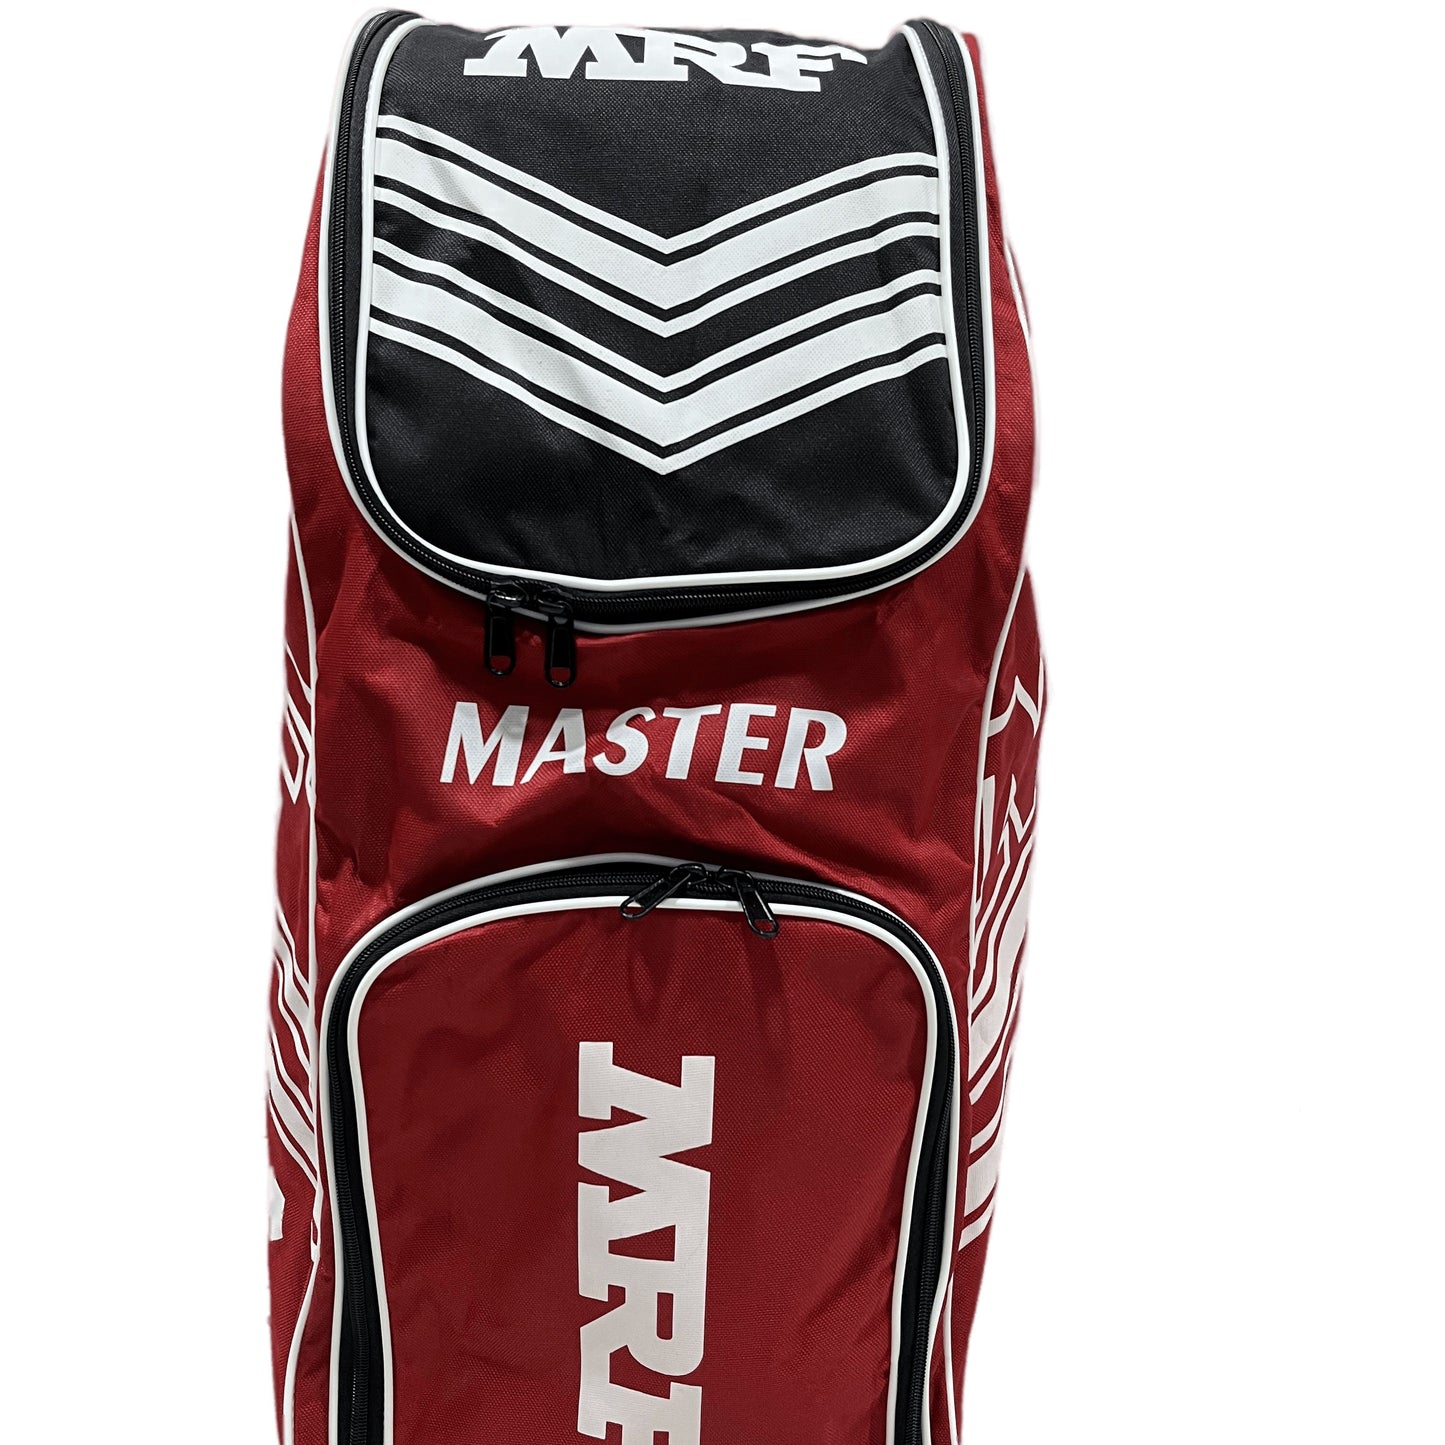 MRF Junior English Willow Legend VK 18 Master Red Cricket Kit Complete Set with Bat, Kit Bag, Gloves, Guards & Accessories